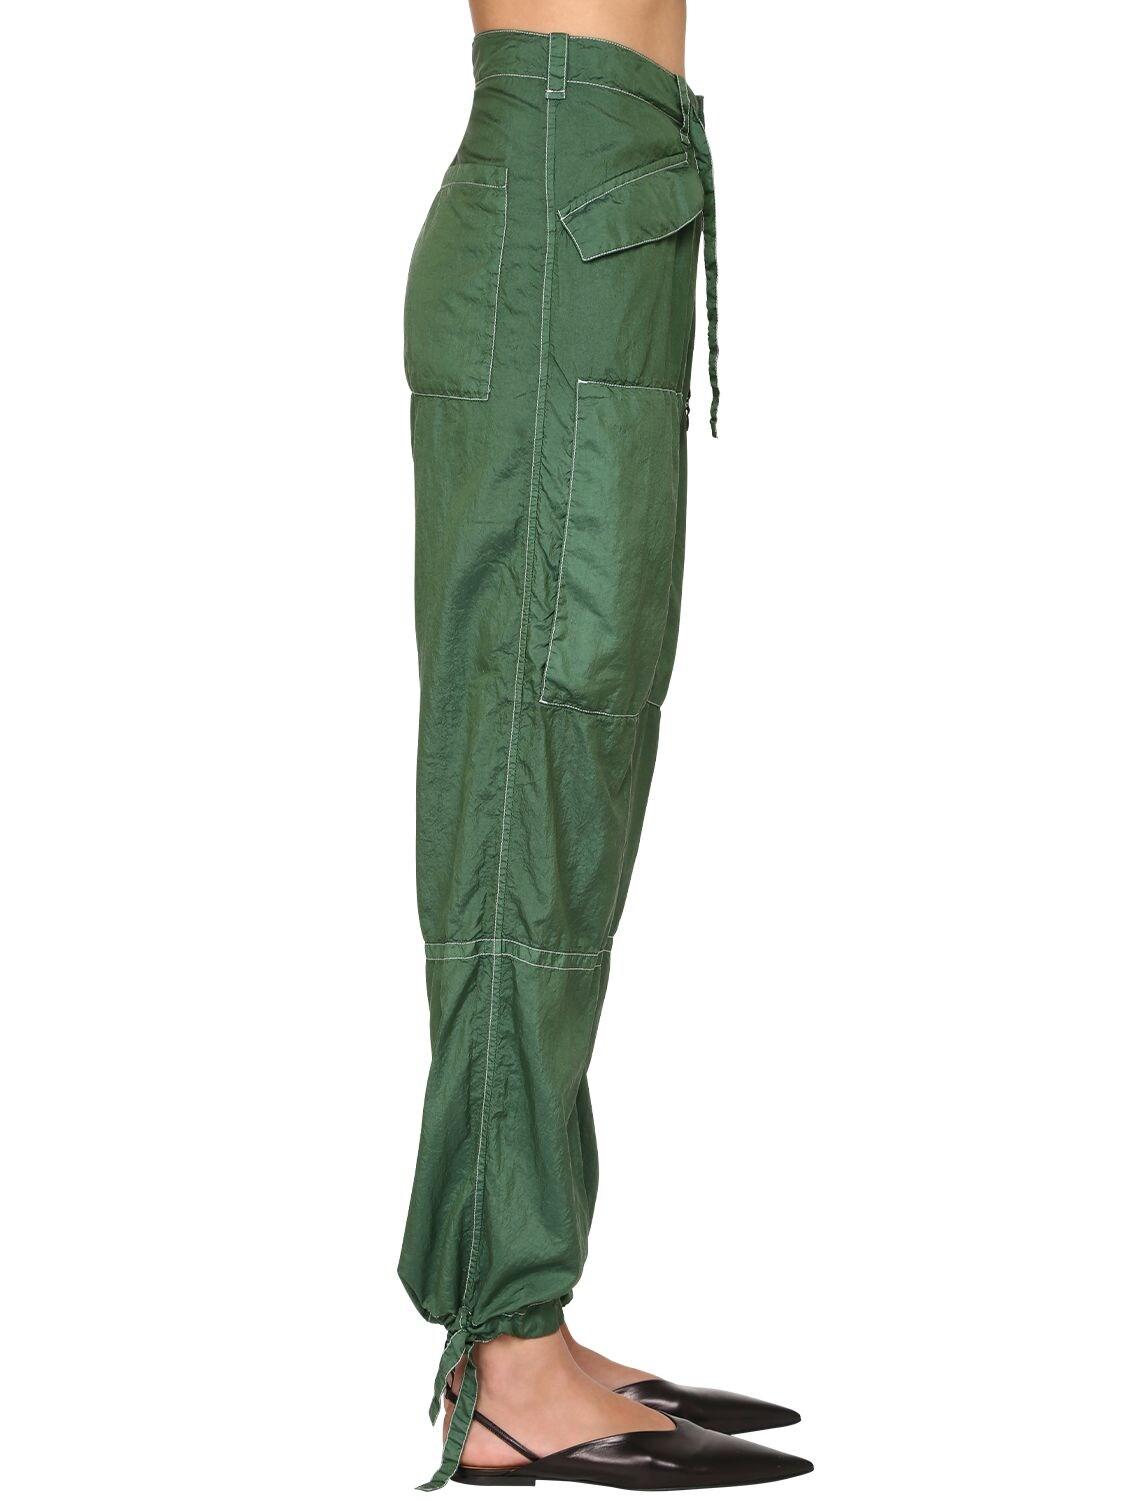 Jil Sander Silk & Nylon Canvas Cargo Pants in Green - Lyst